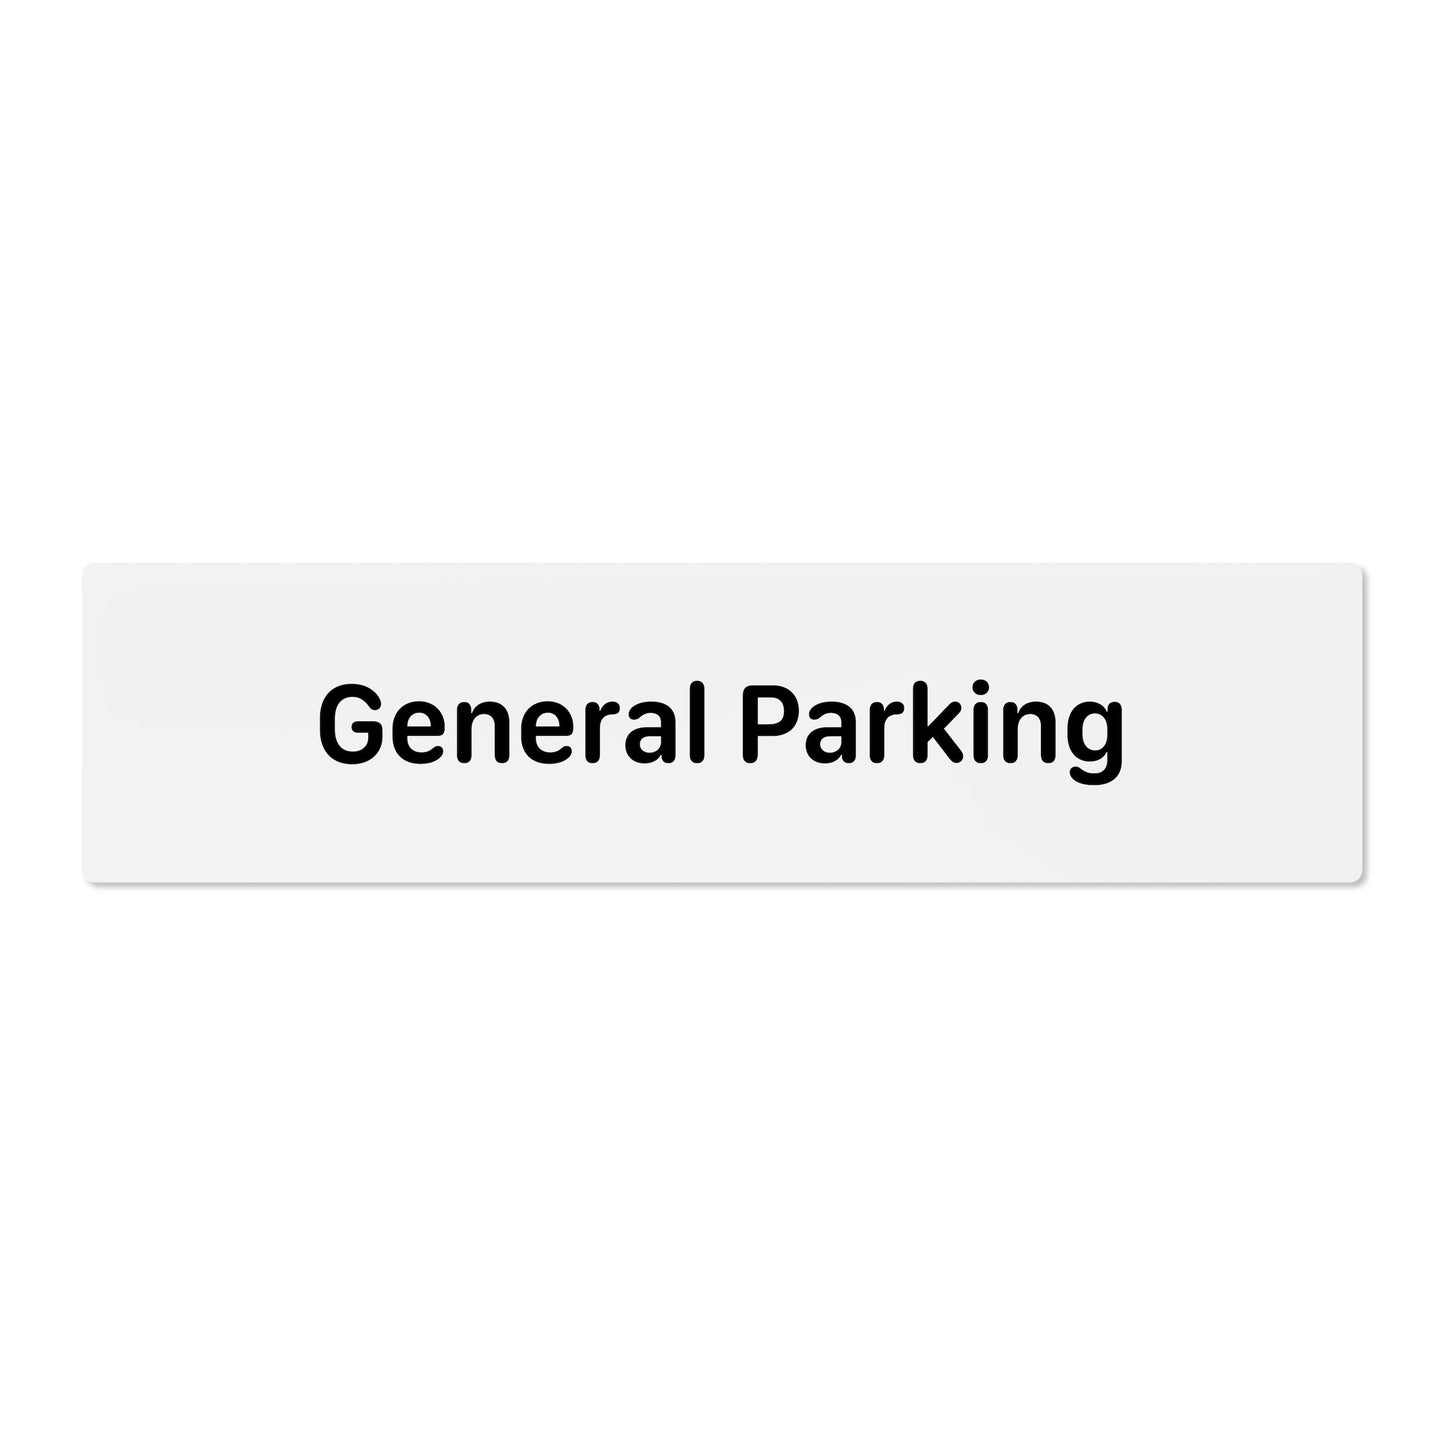 General Parking